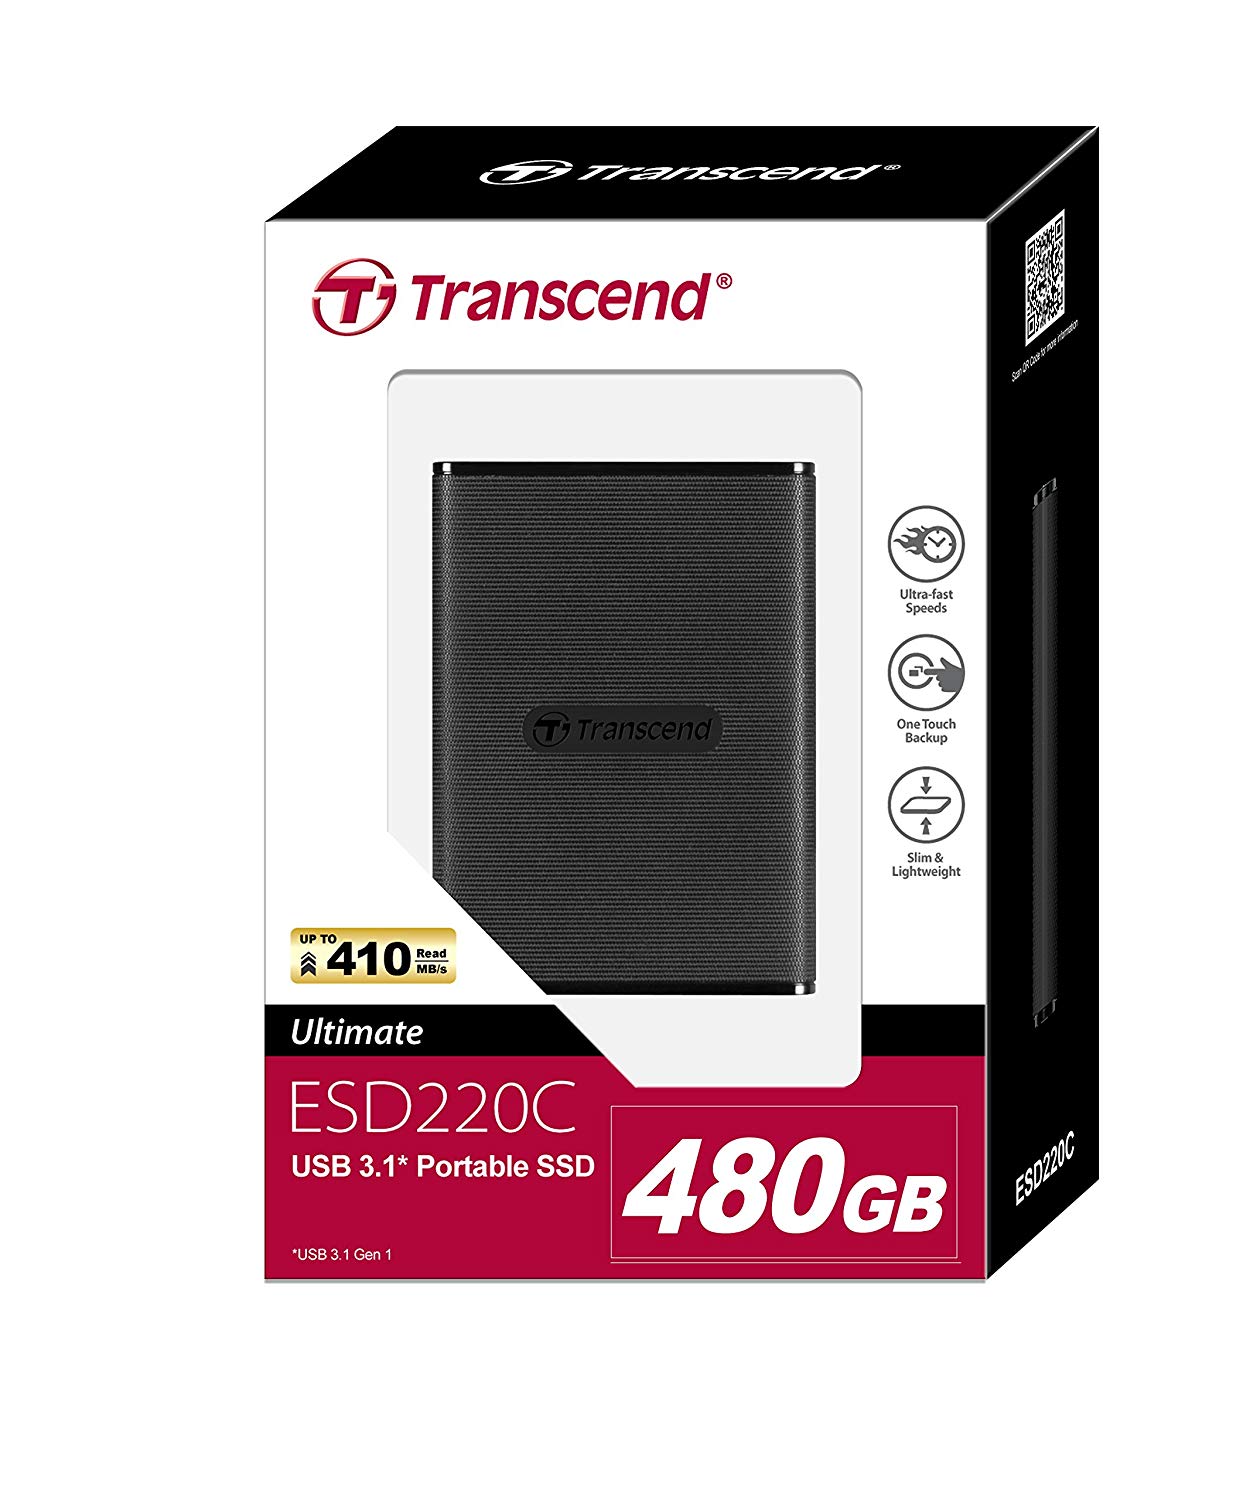 Transcend 480GB Portable SSD TLC USB 3.1, Black (TS480GESD220C)